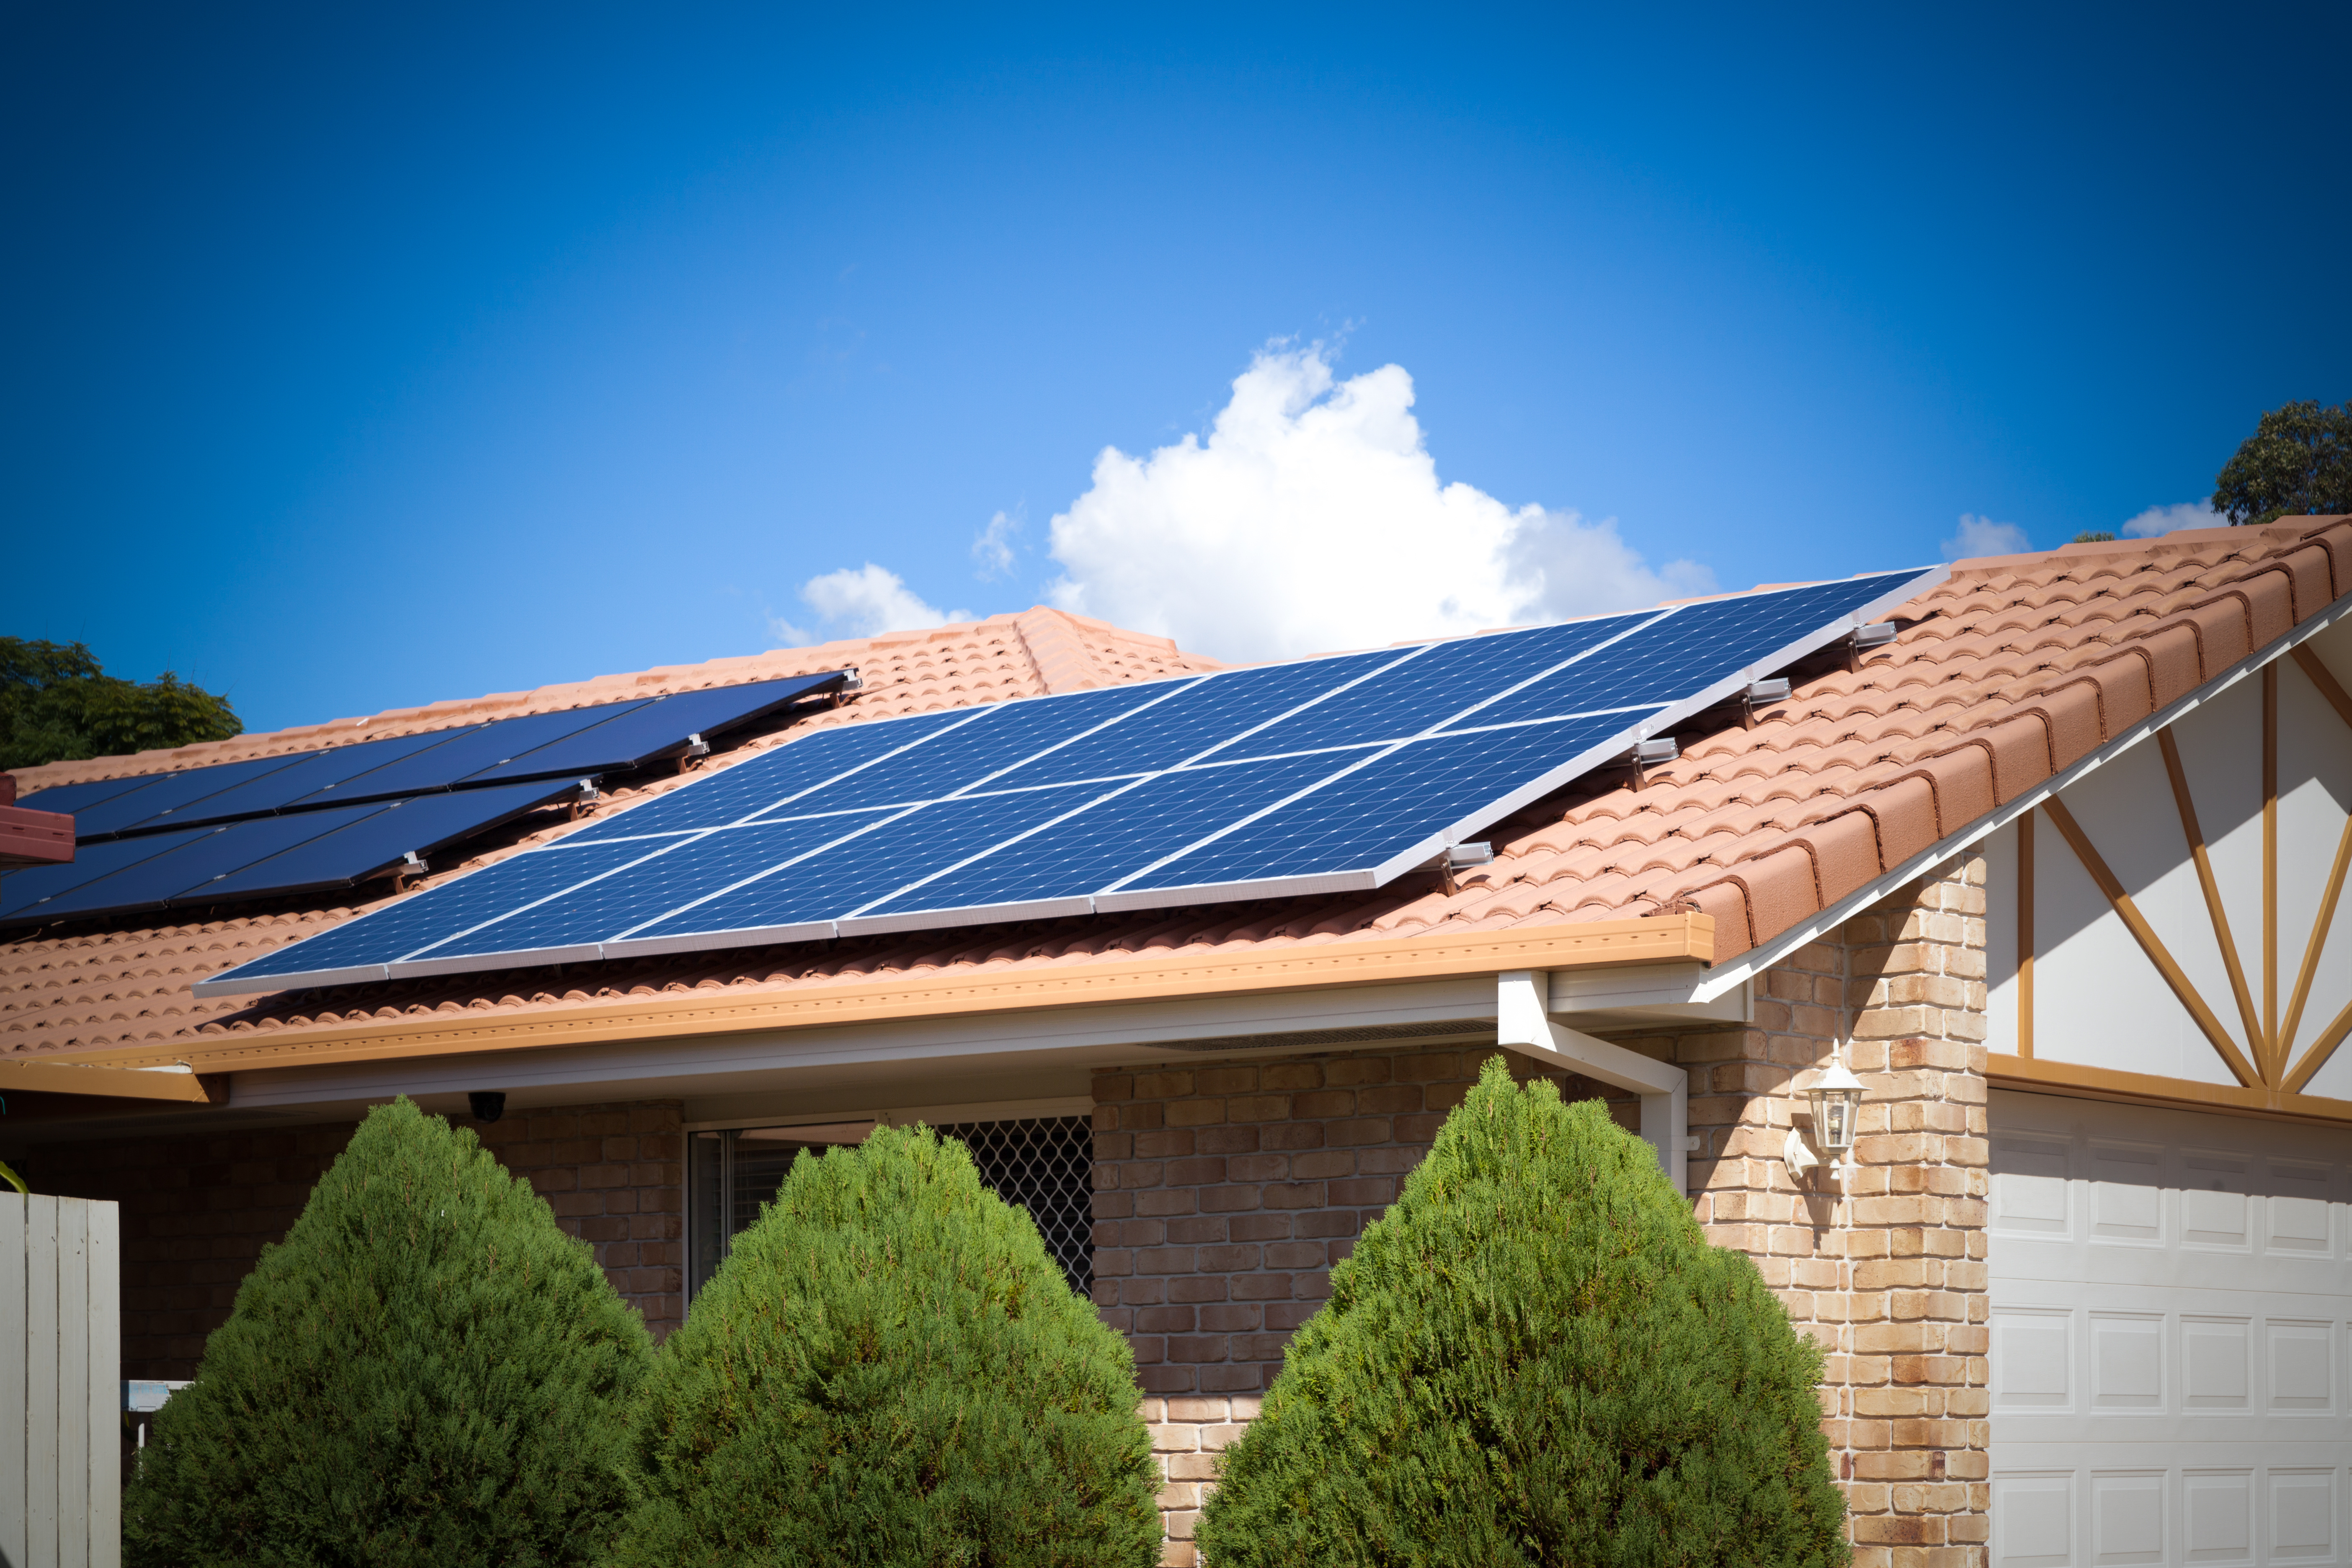 solar-on-tile-roof-adobestock-98217142.jpeg